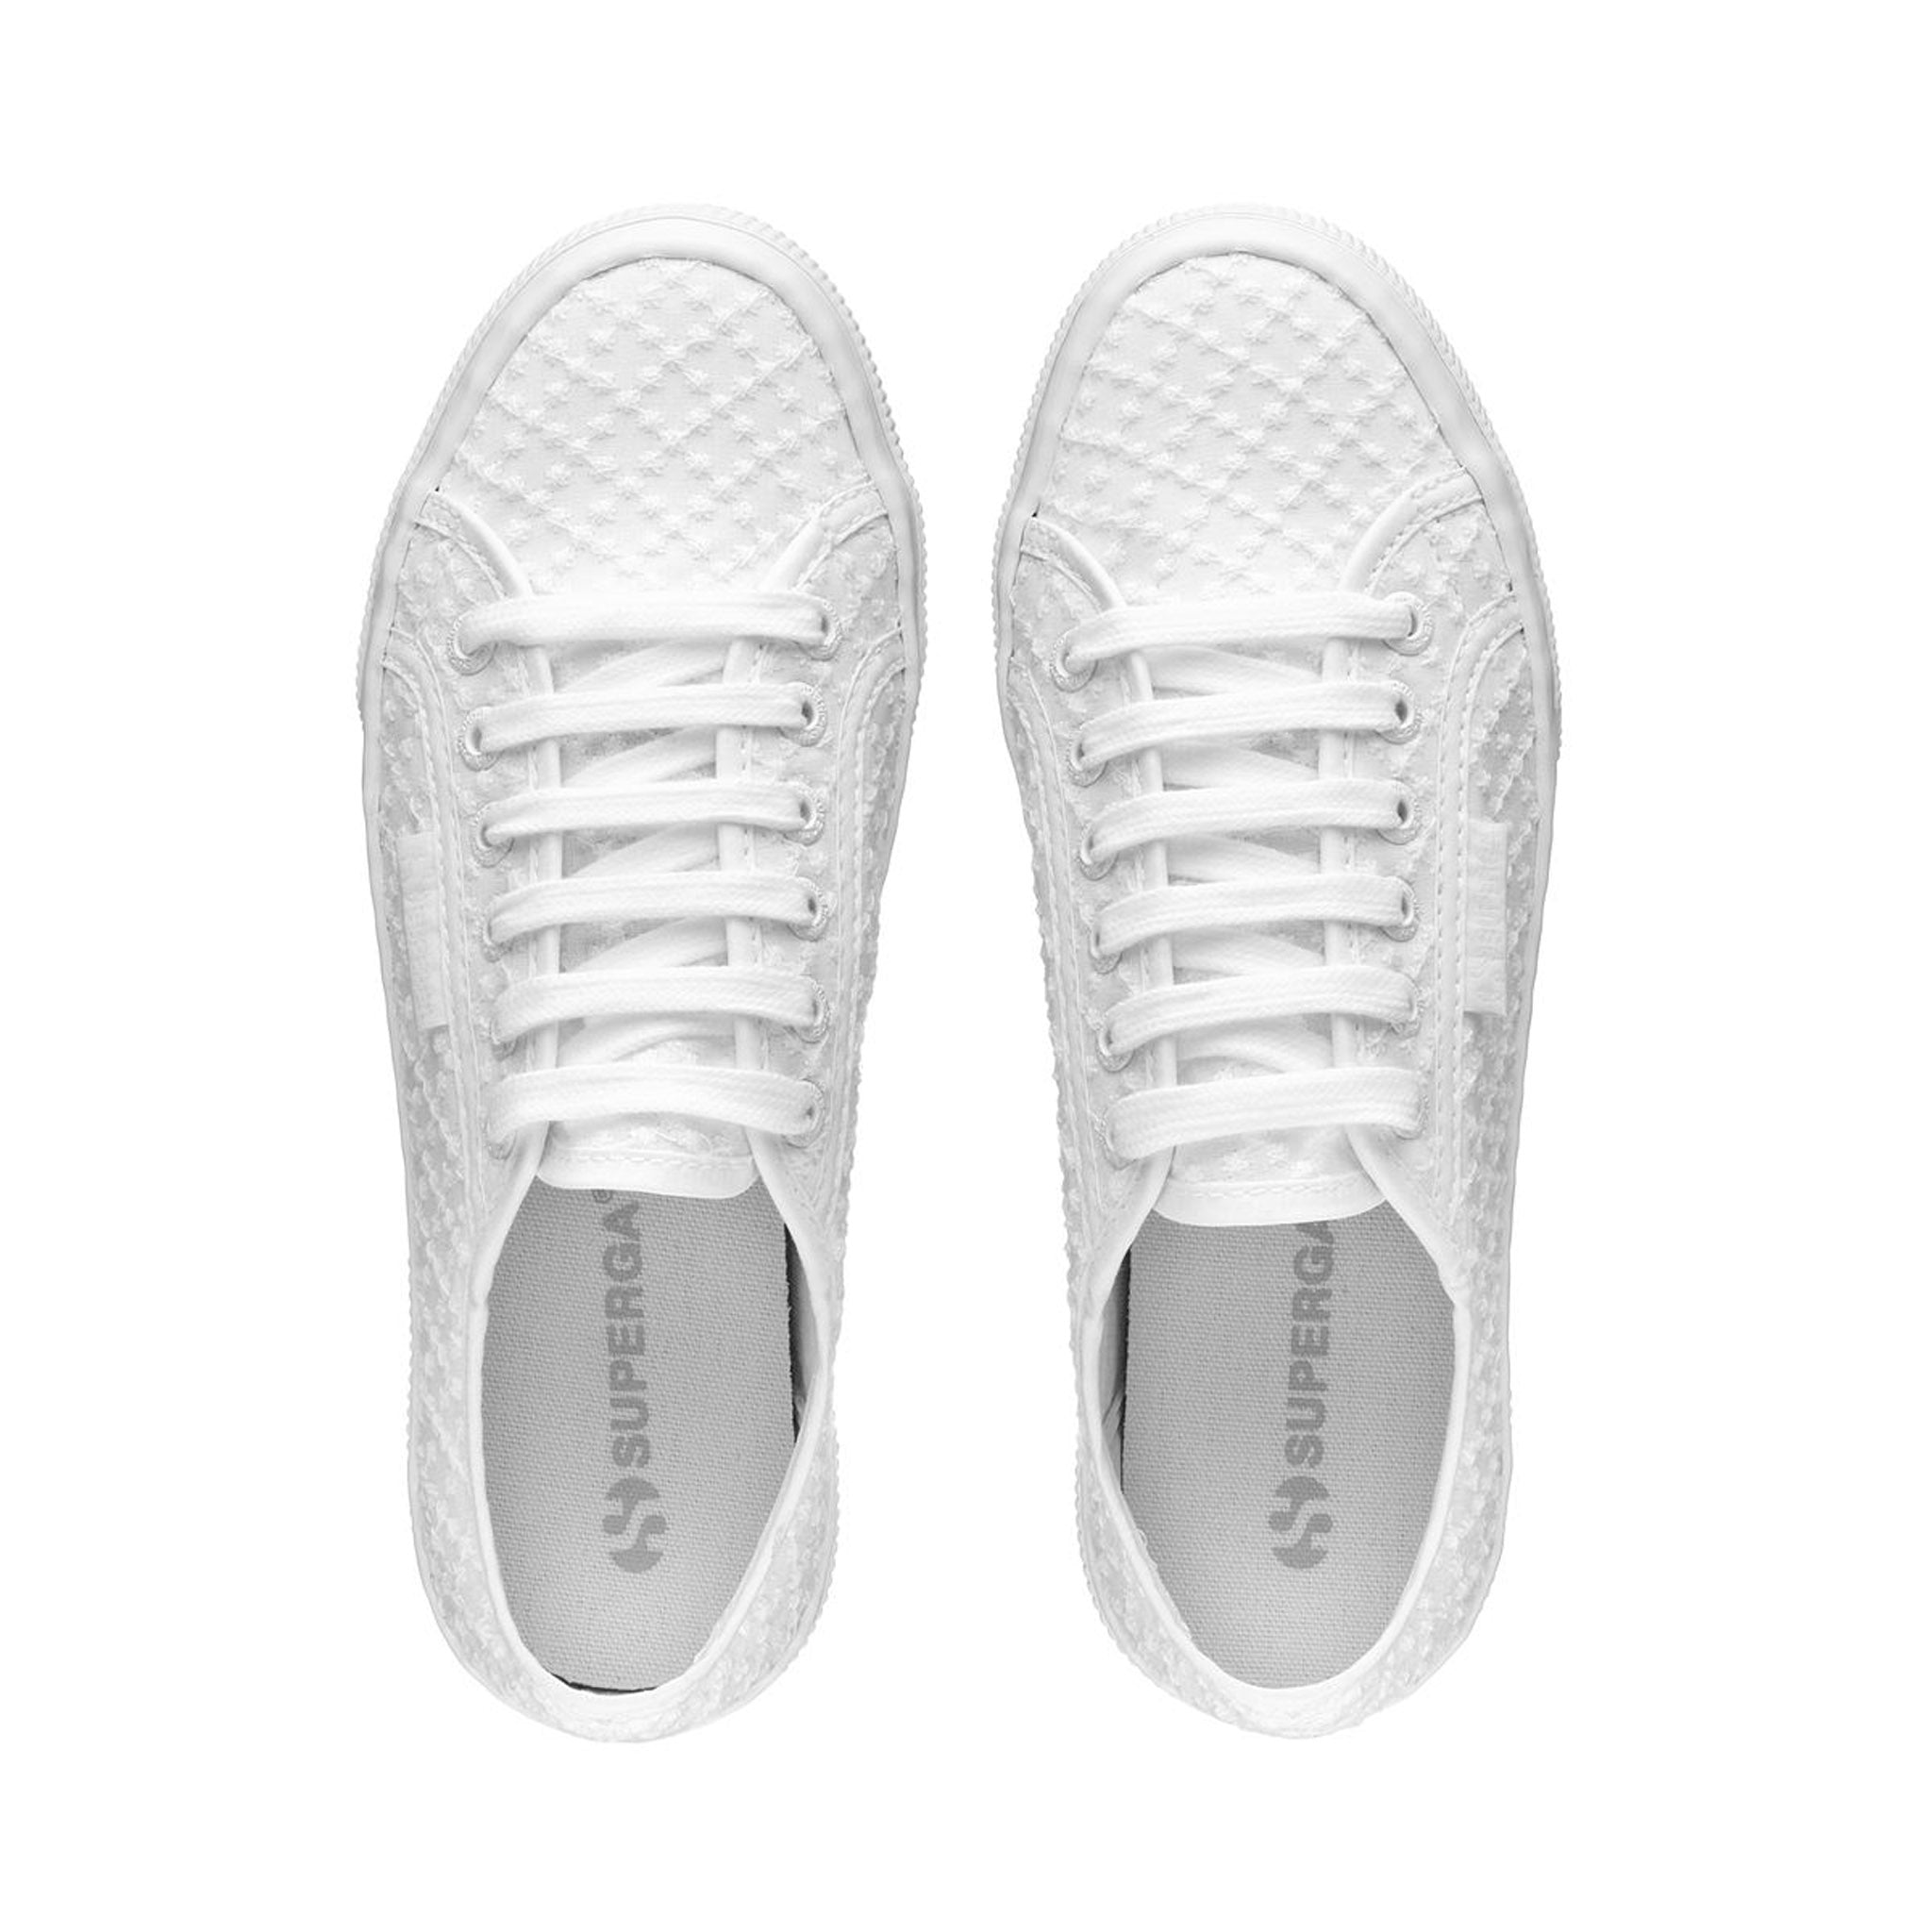 Superga 2740 Platform Macrame Rhombus Sneakers - Total White. Top view.